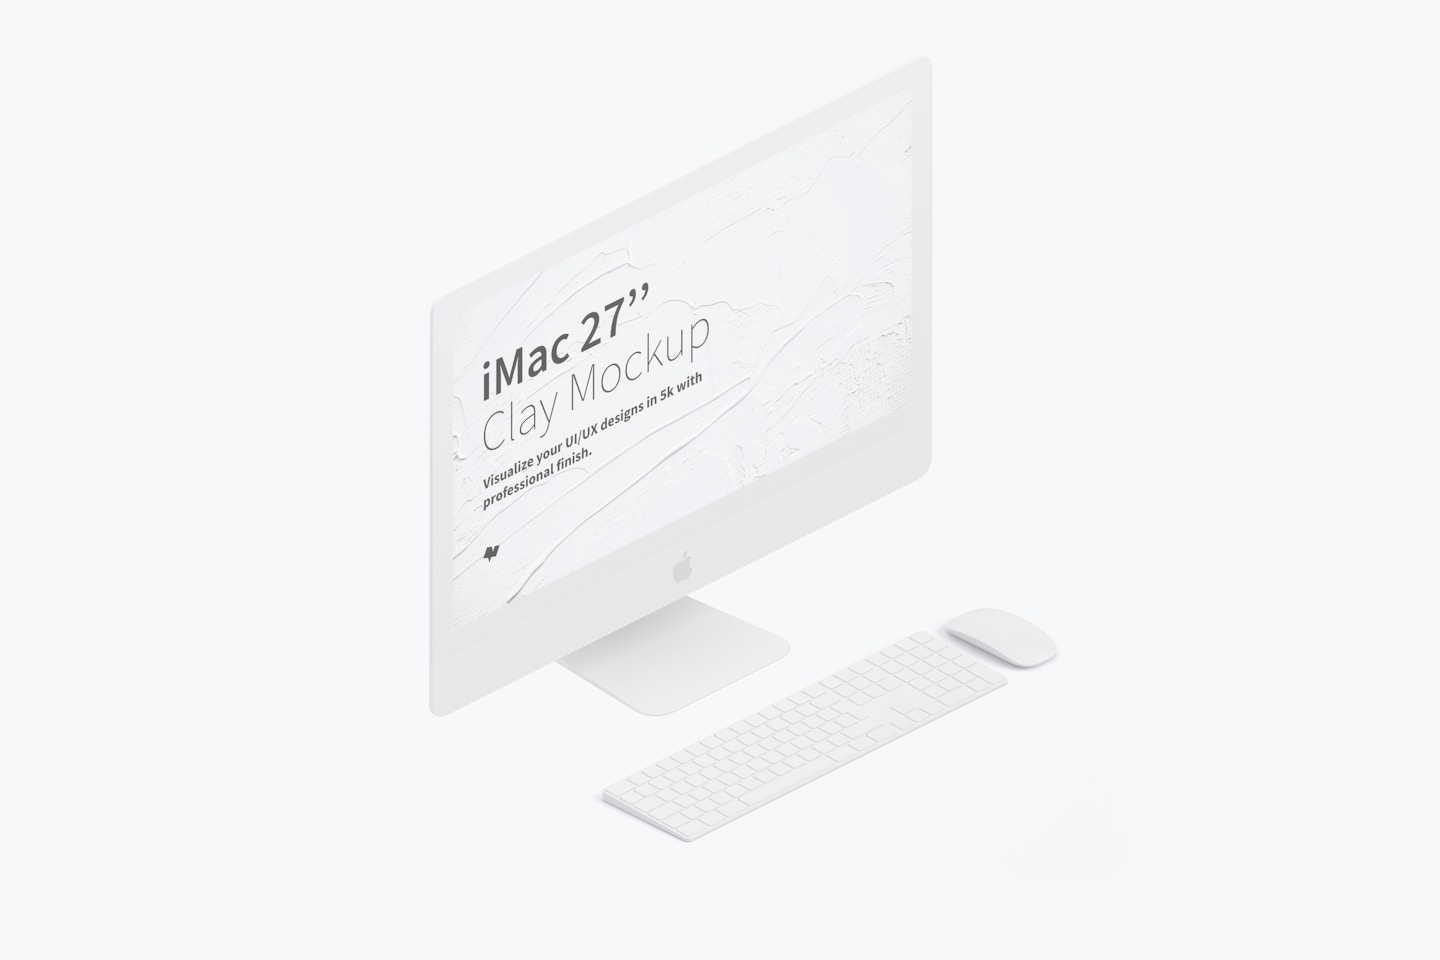 Clay iMac 27” Mockup, Isometric Left View